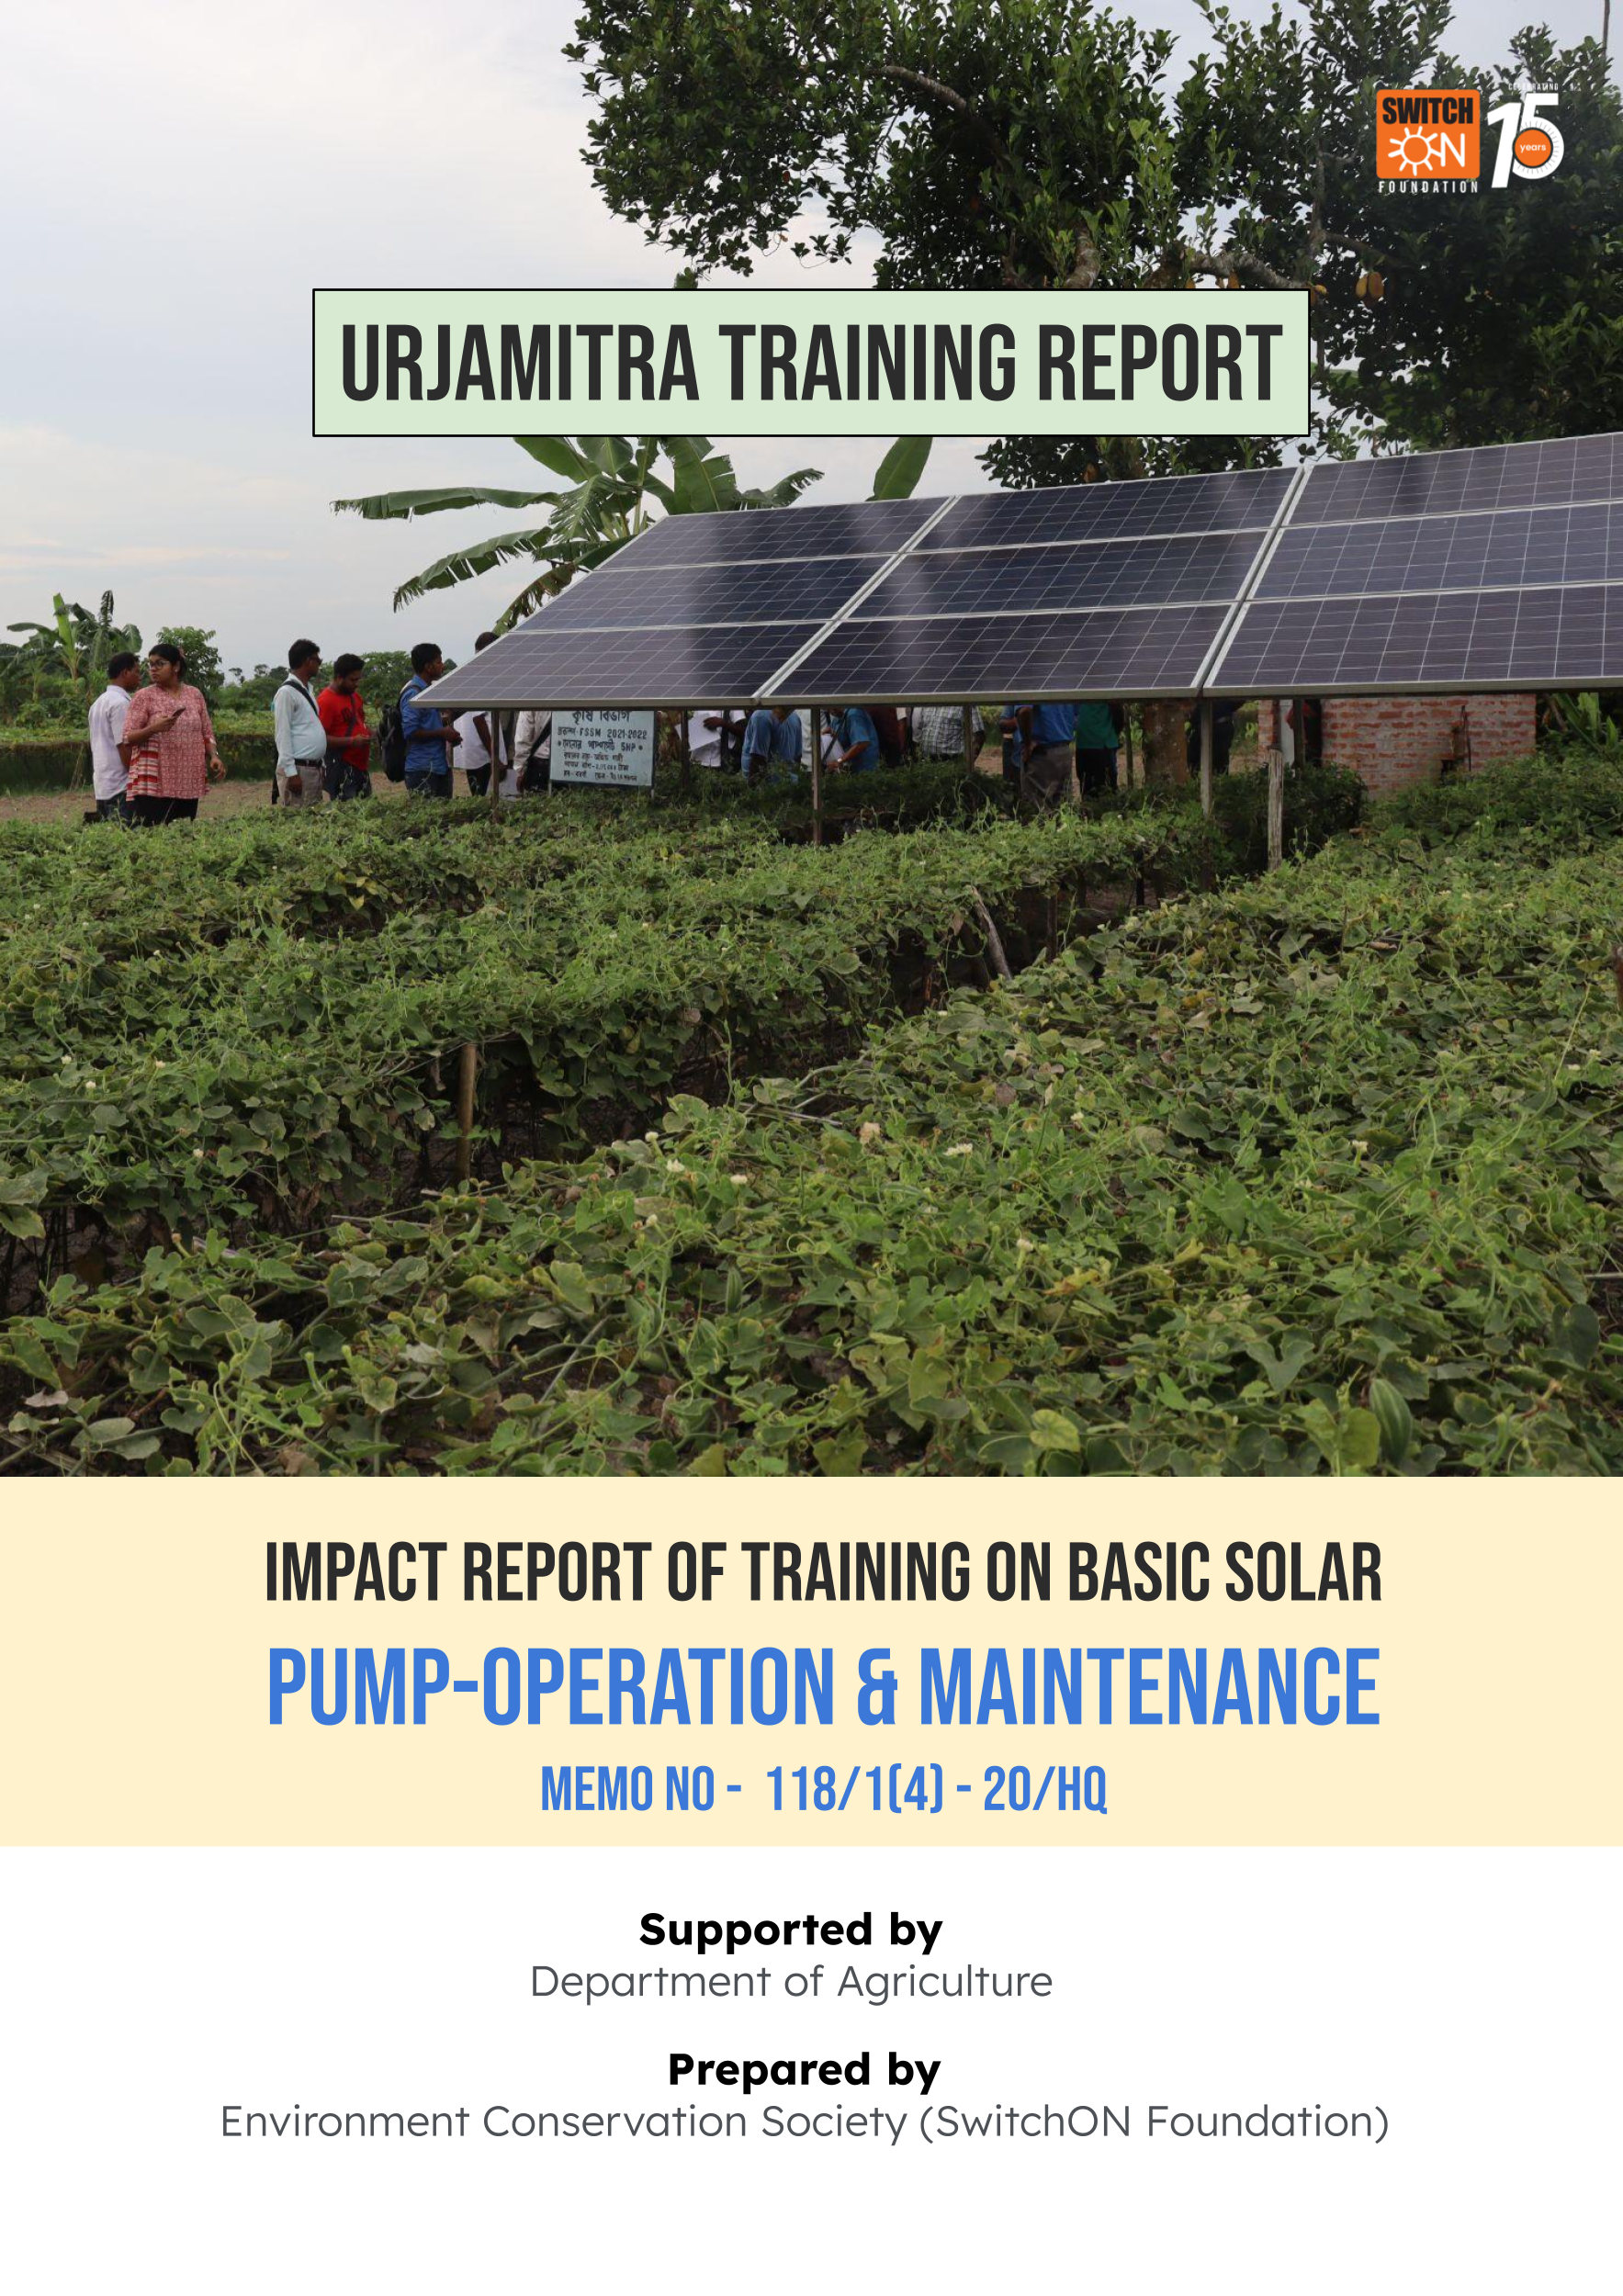 Impact Report of Urjamitra training on Basic Solar Pump